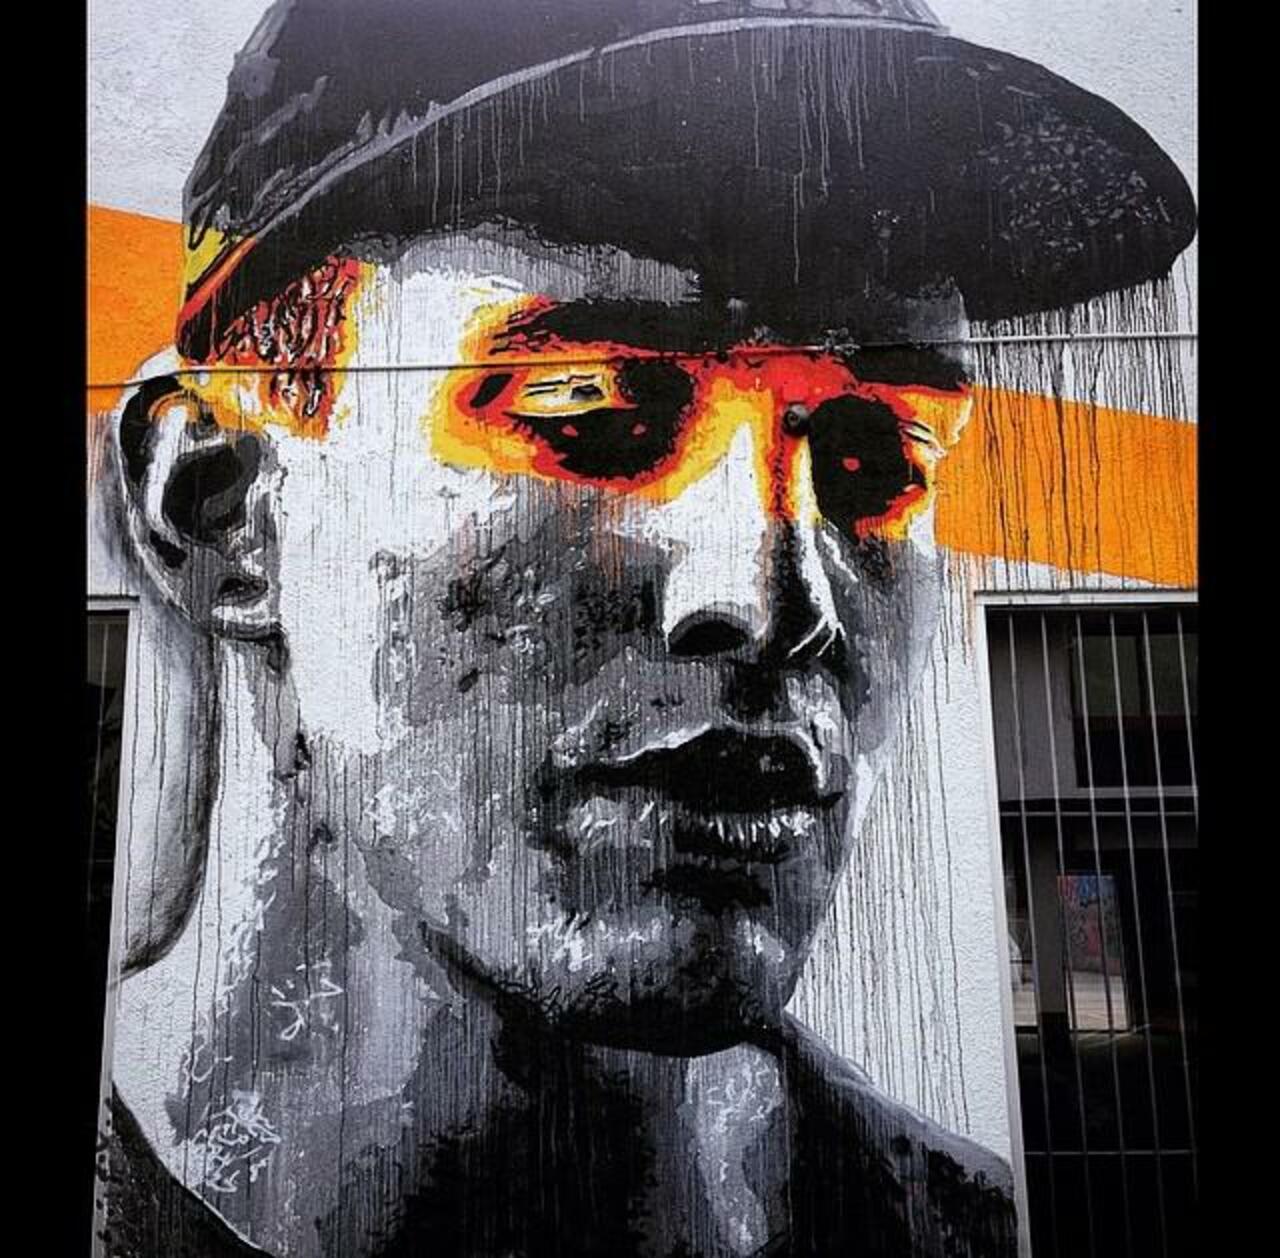 Artist Nils Westergard Street Art portrait in Miami 

#art #graffiti #mural #streetart http://t.co/mjHREv0YpR